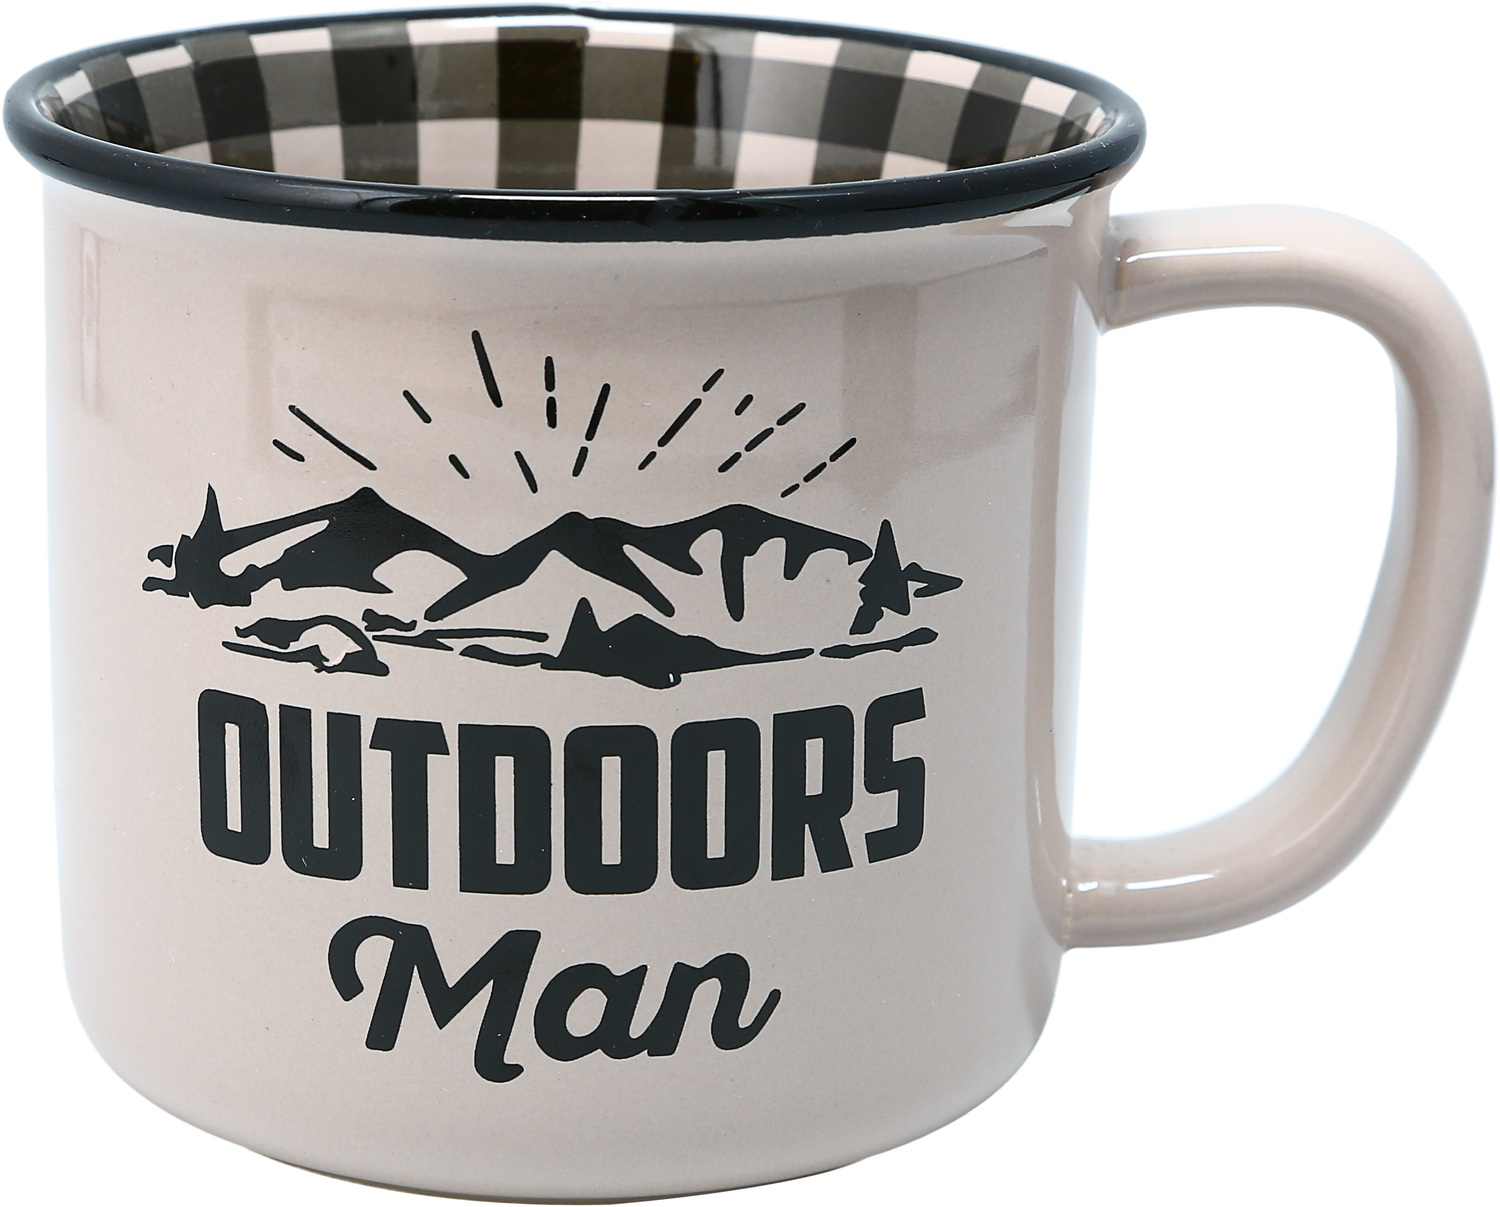 Outdoors Man by Man Out - Outdoors Man - 18 oz Mug